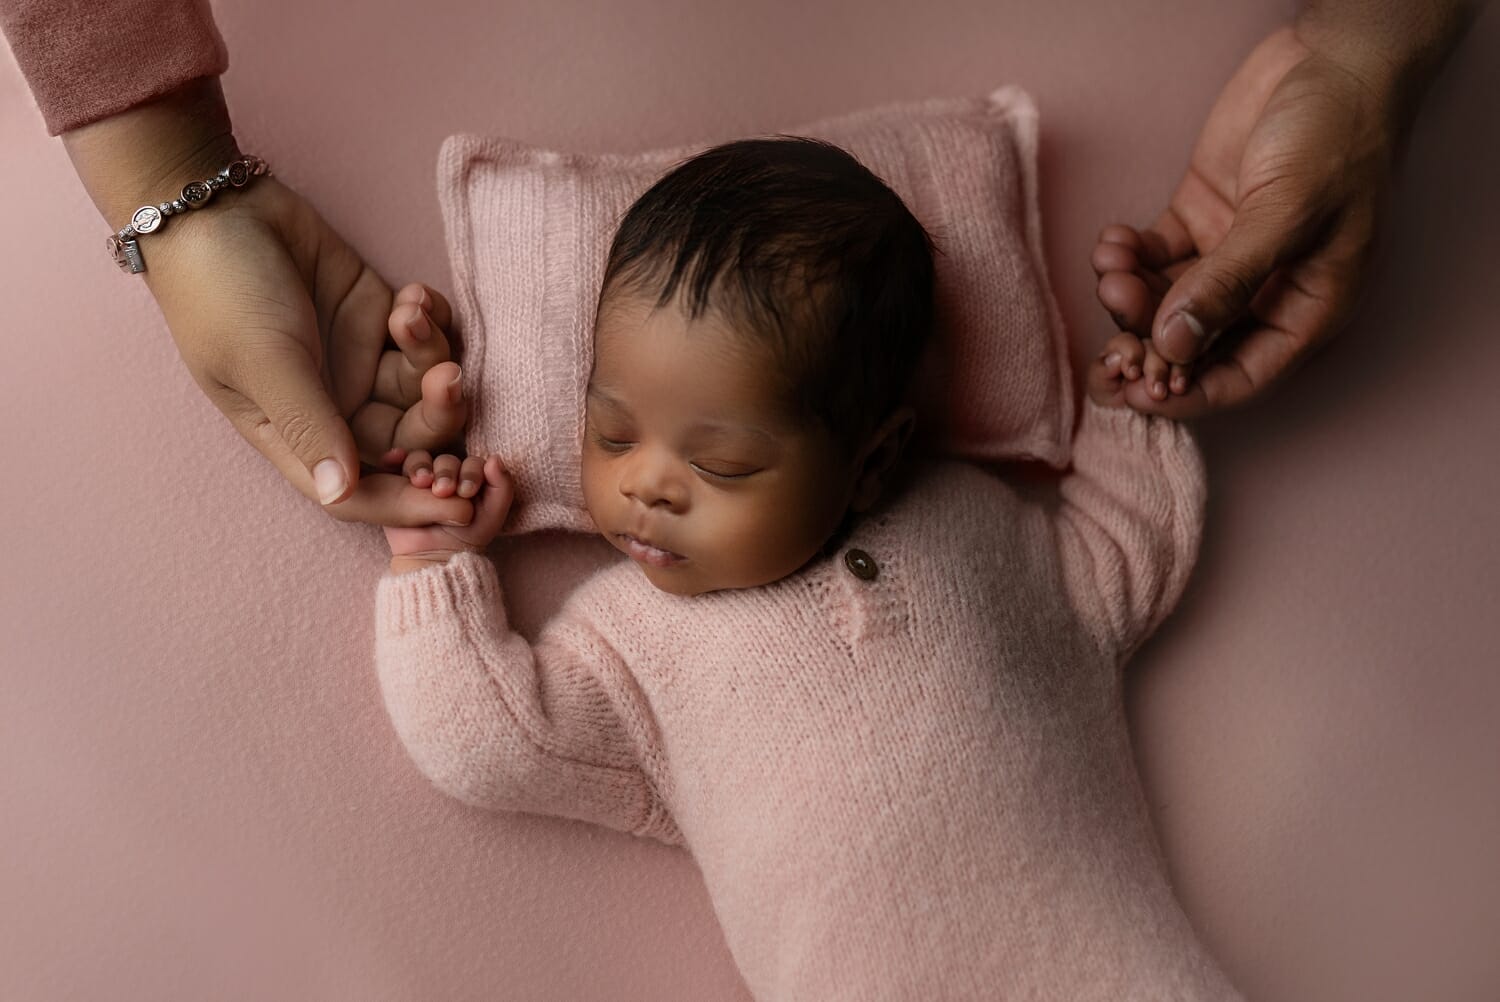 Parents hold a newborn baby's hands in a newborn photo shoot.